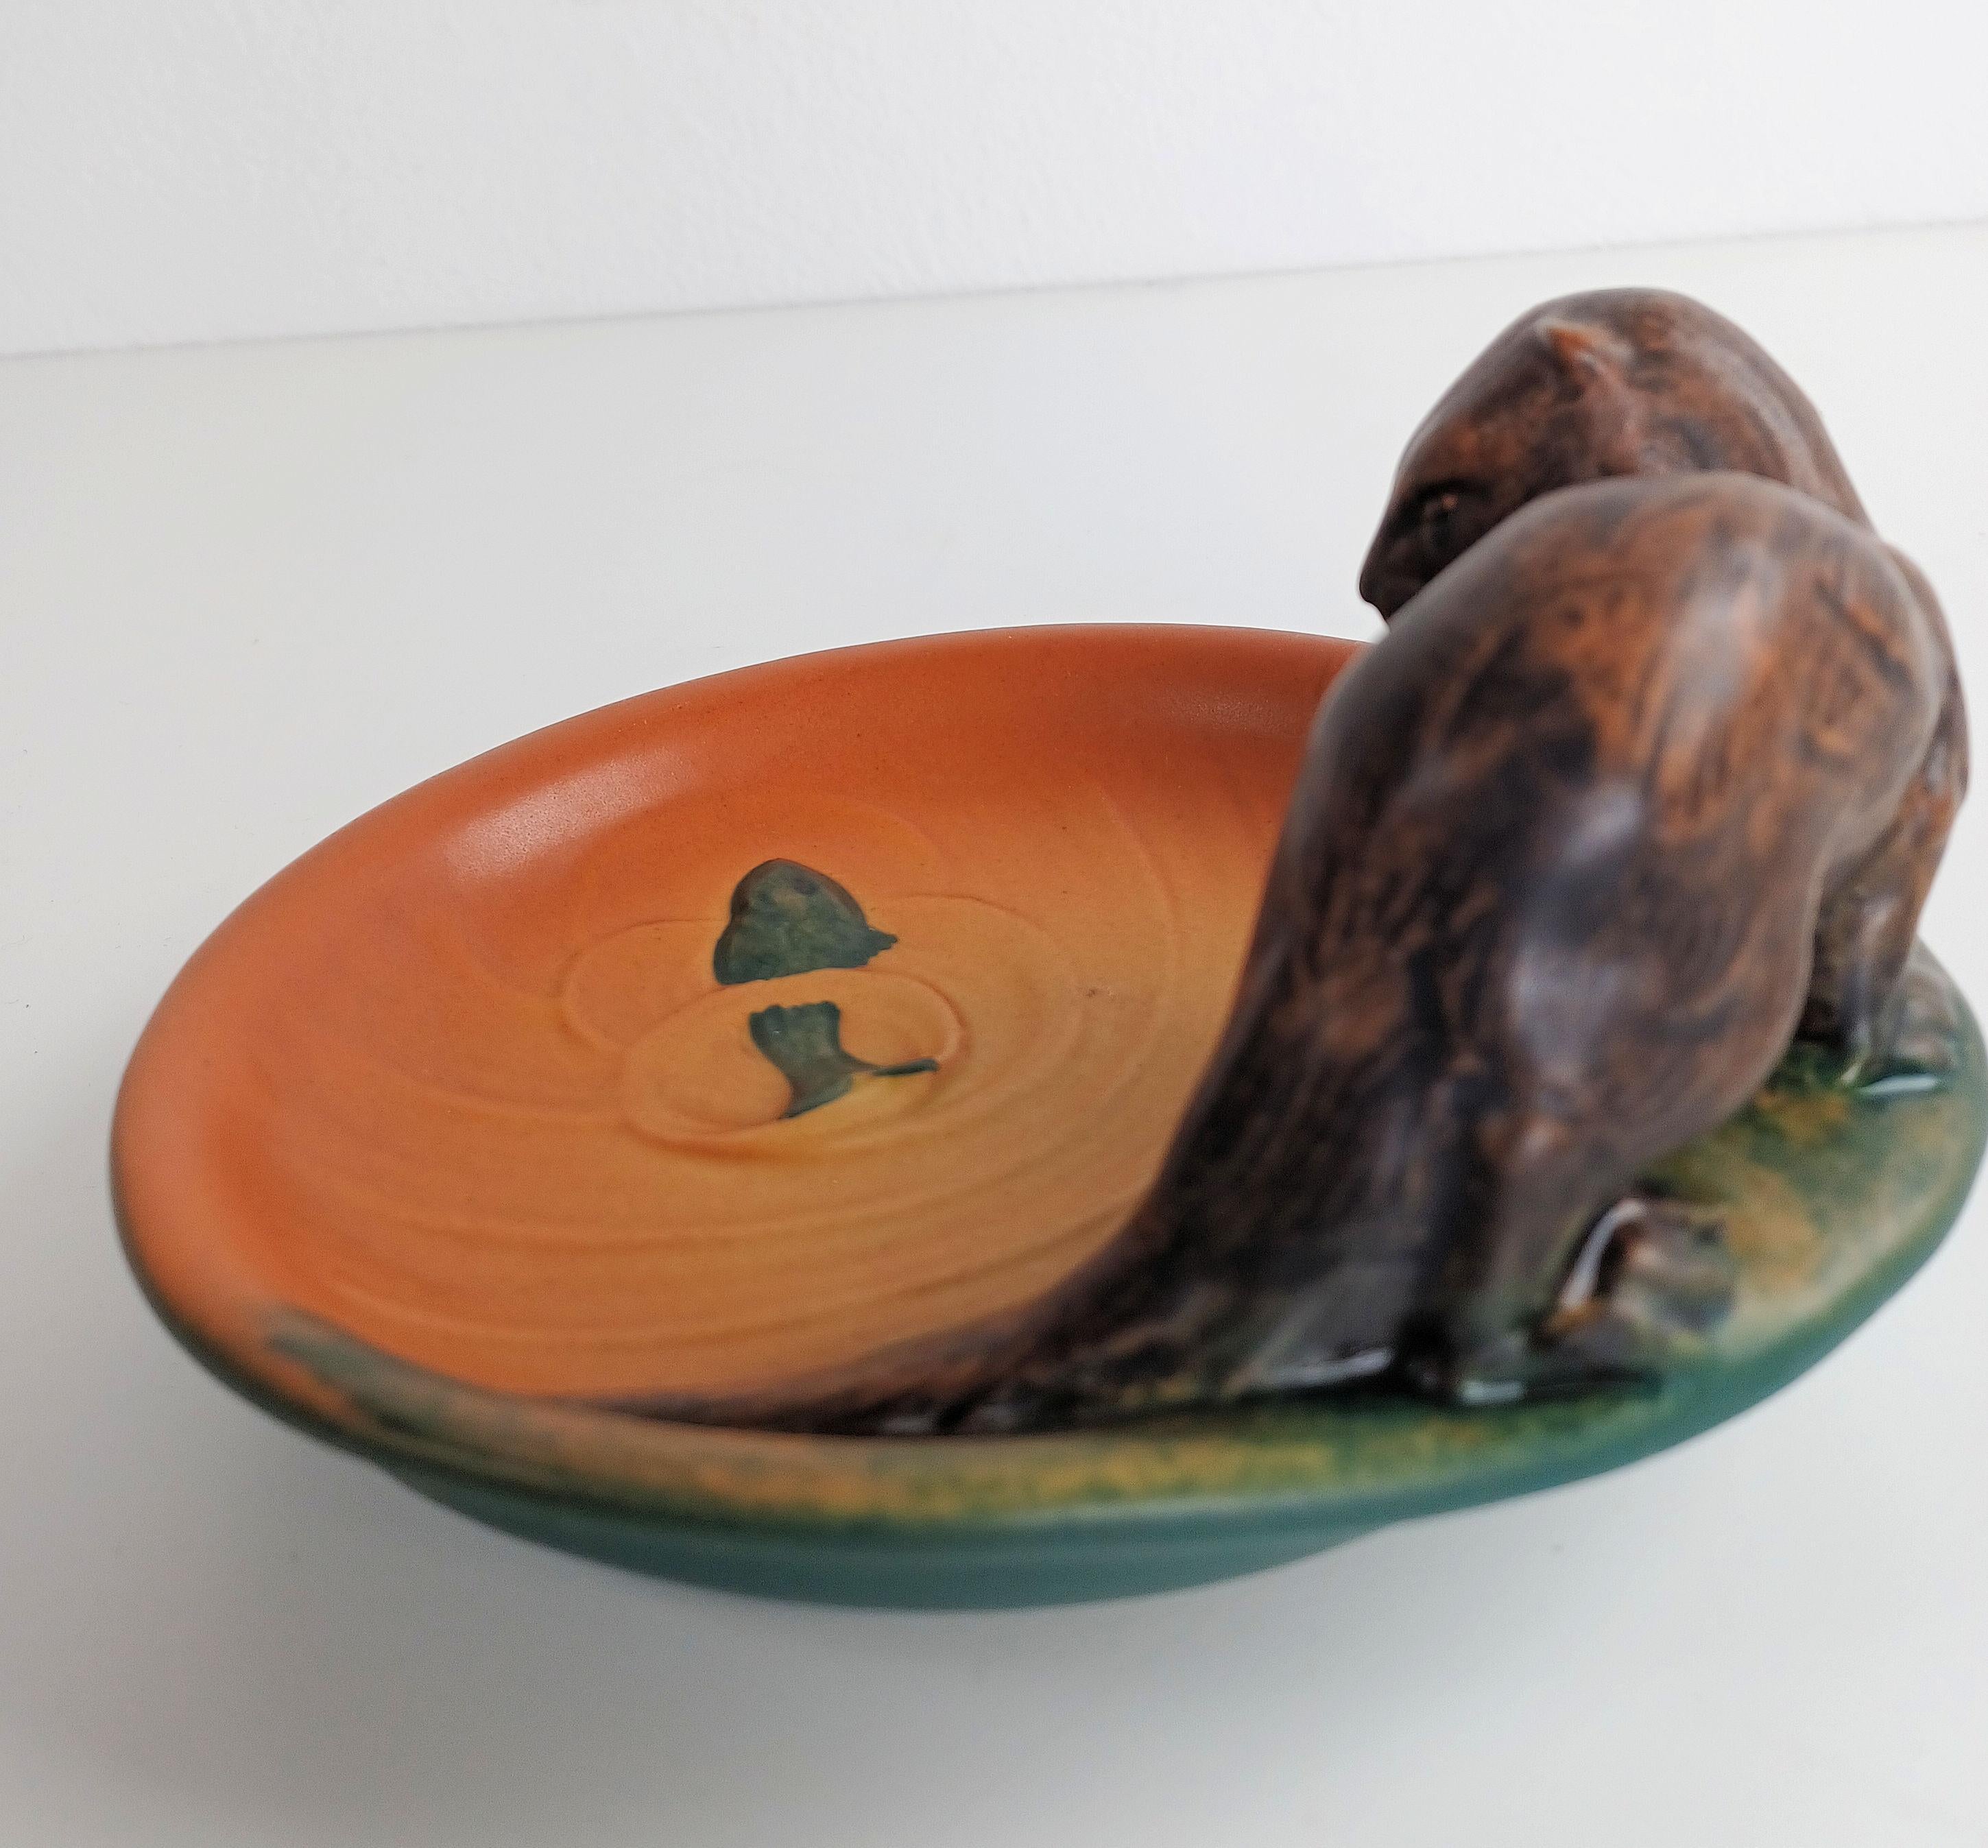 1930s Danish Hand-Crafted Art Nouveau Polecat Ash Tray / Bowl by P. Ipsens Enke For Sale 1